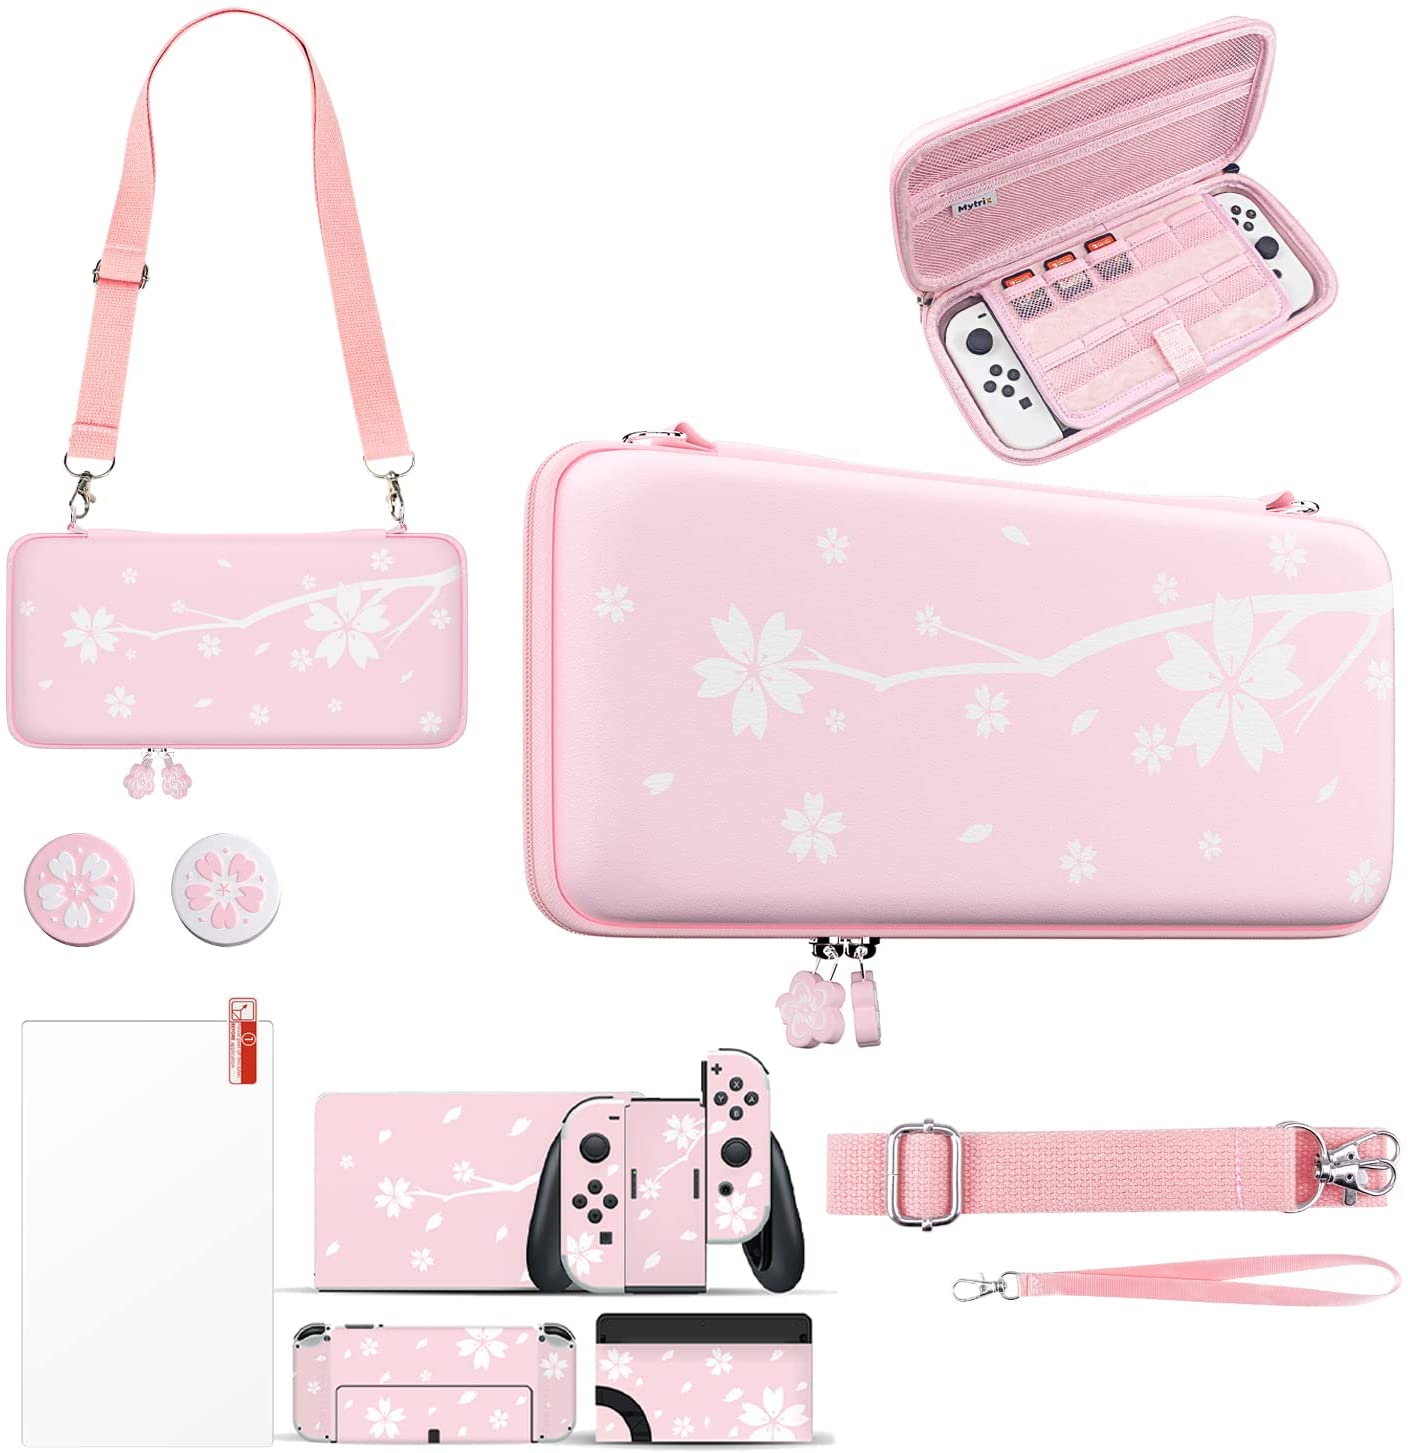 Pink cherry sakura flower Nintendo switch case and stickers